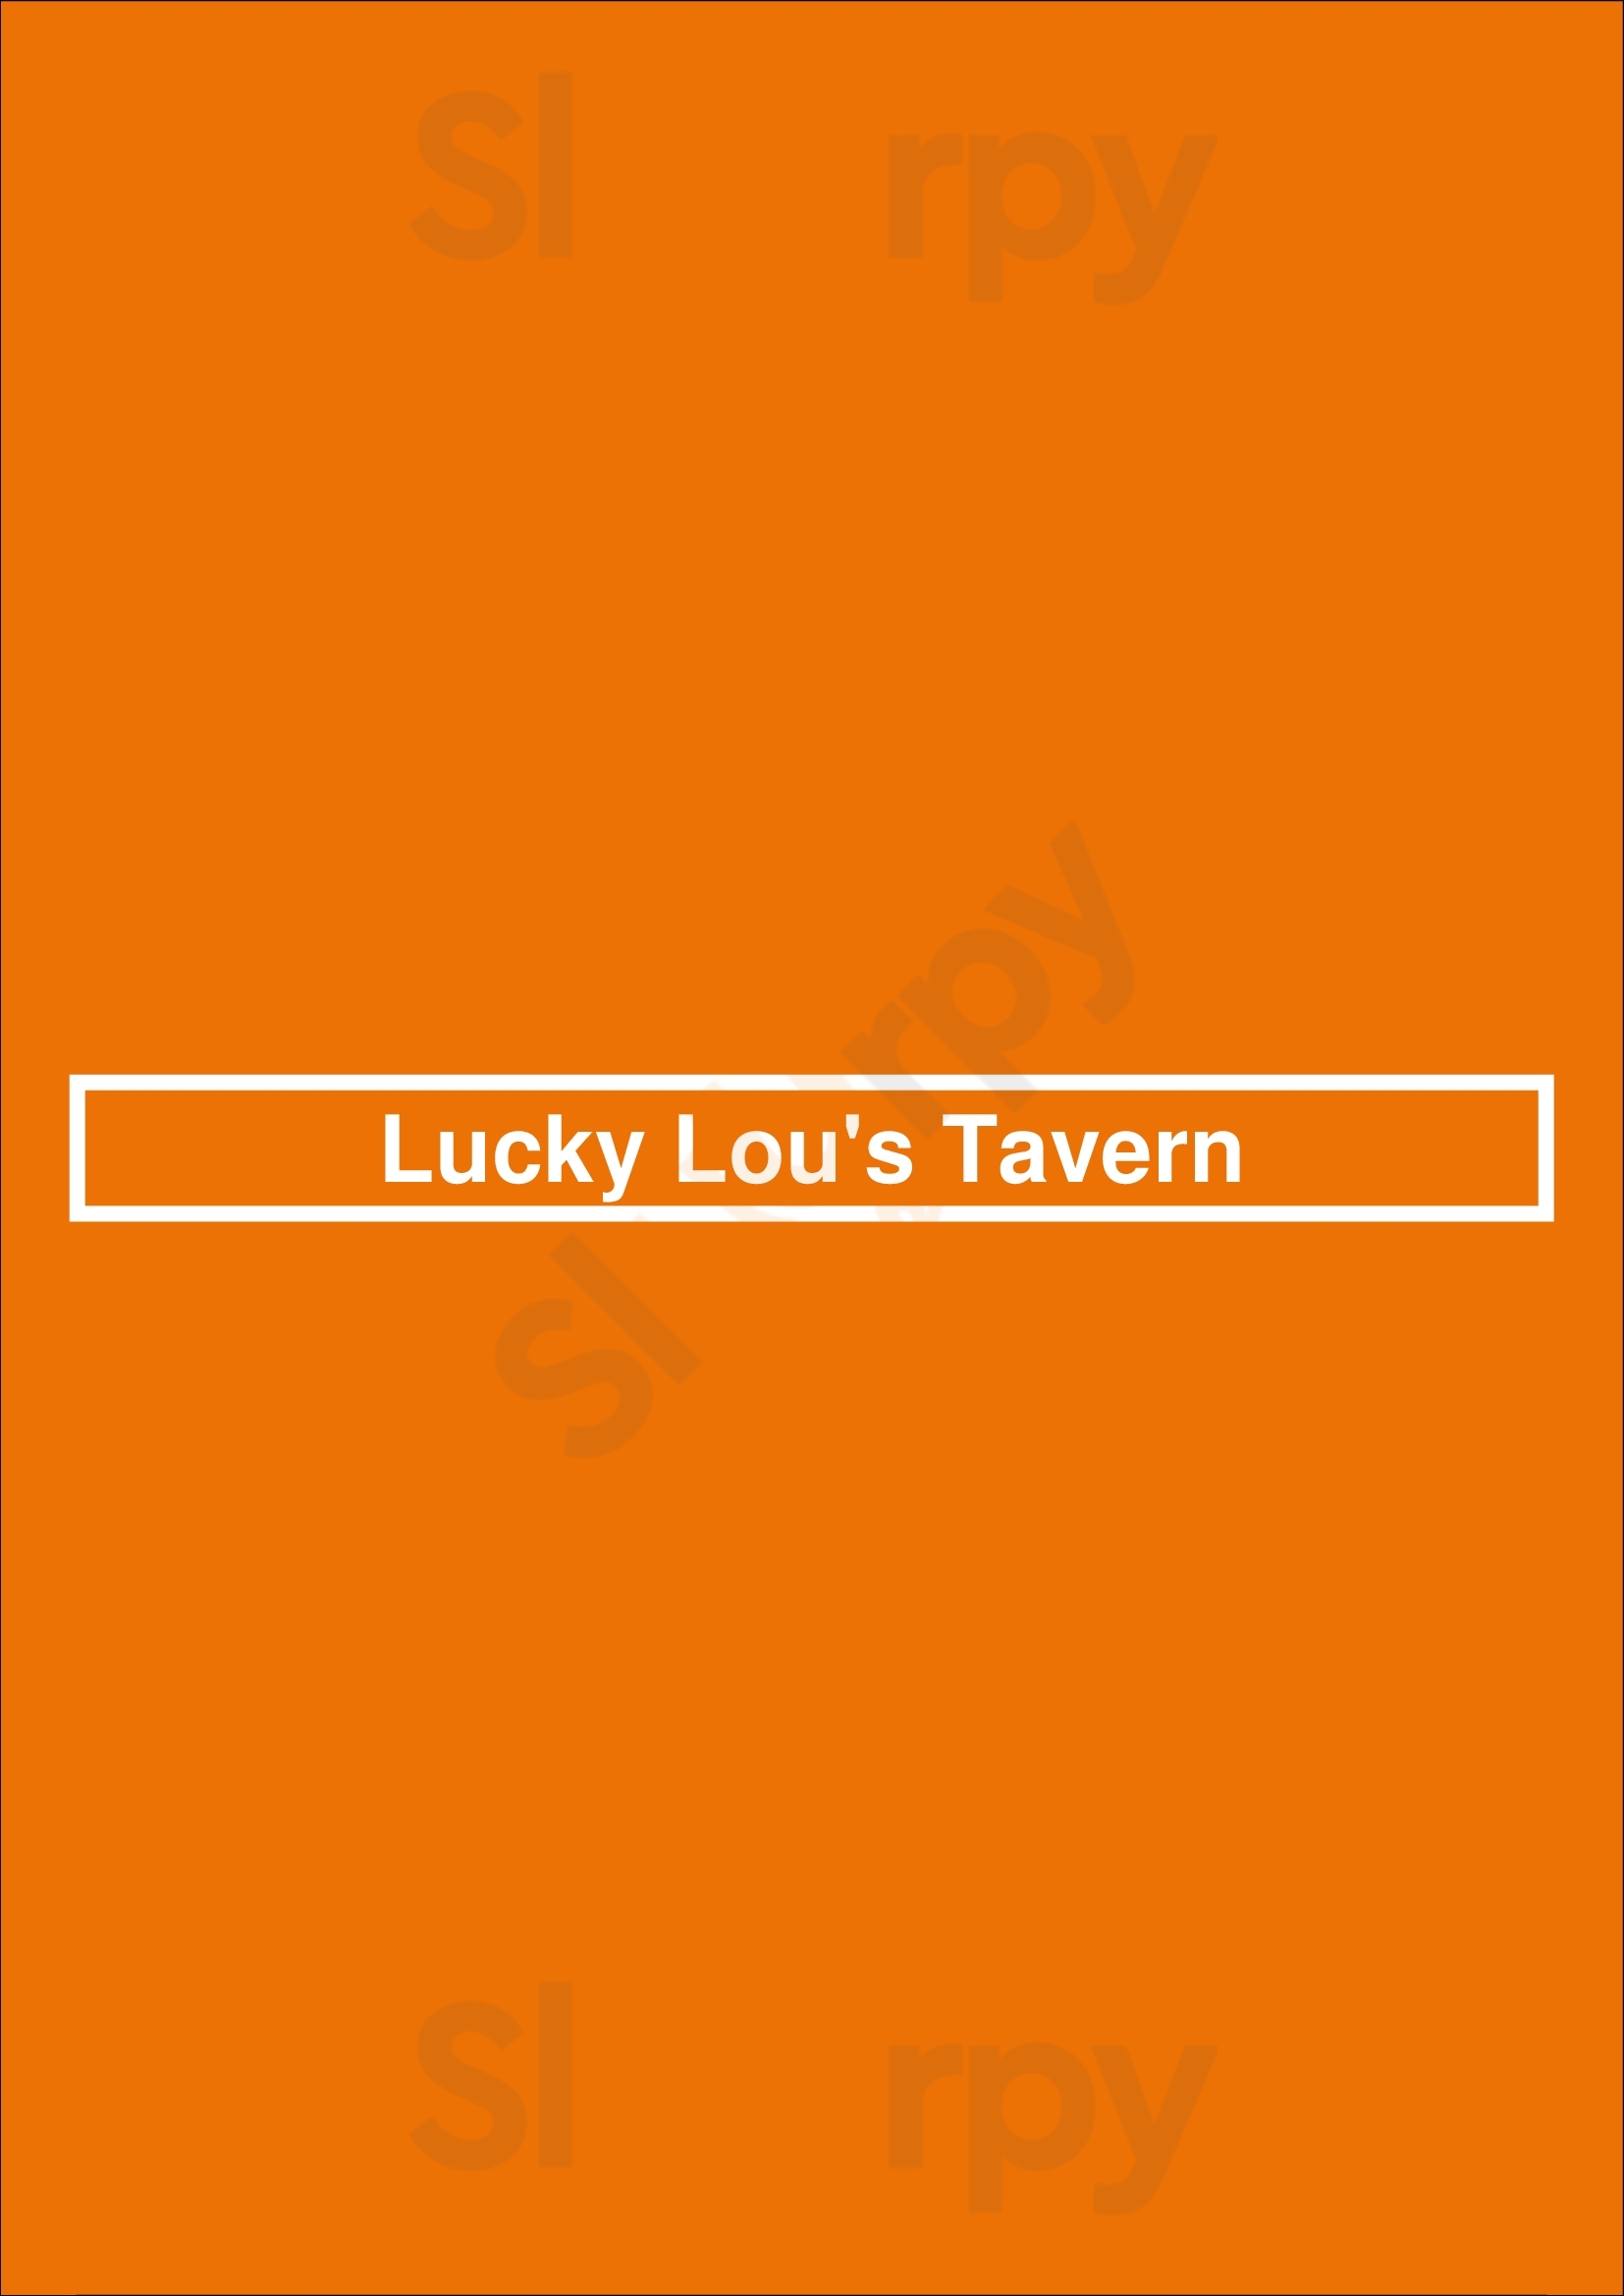 Lucky Lou's Tavern Charlotte Menu - 1